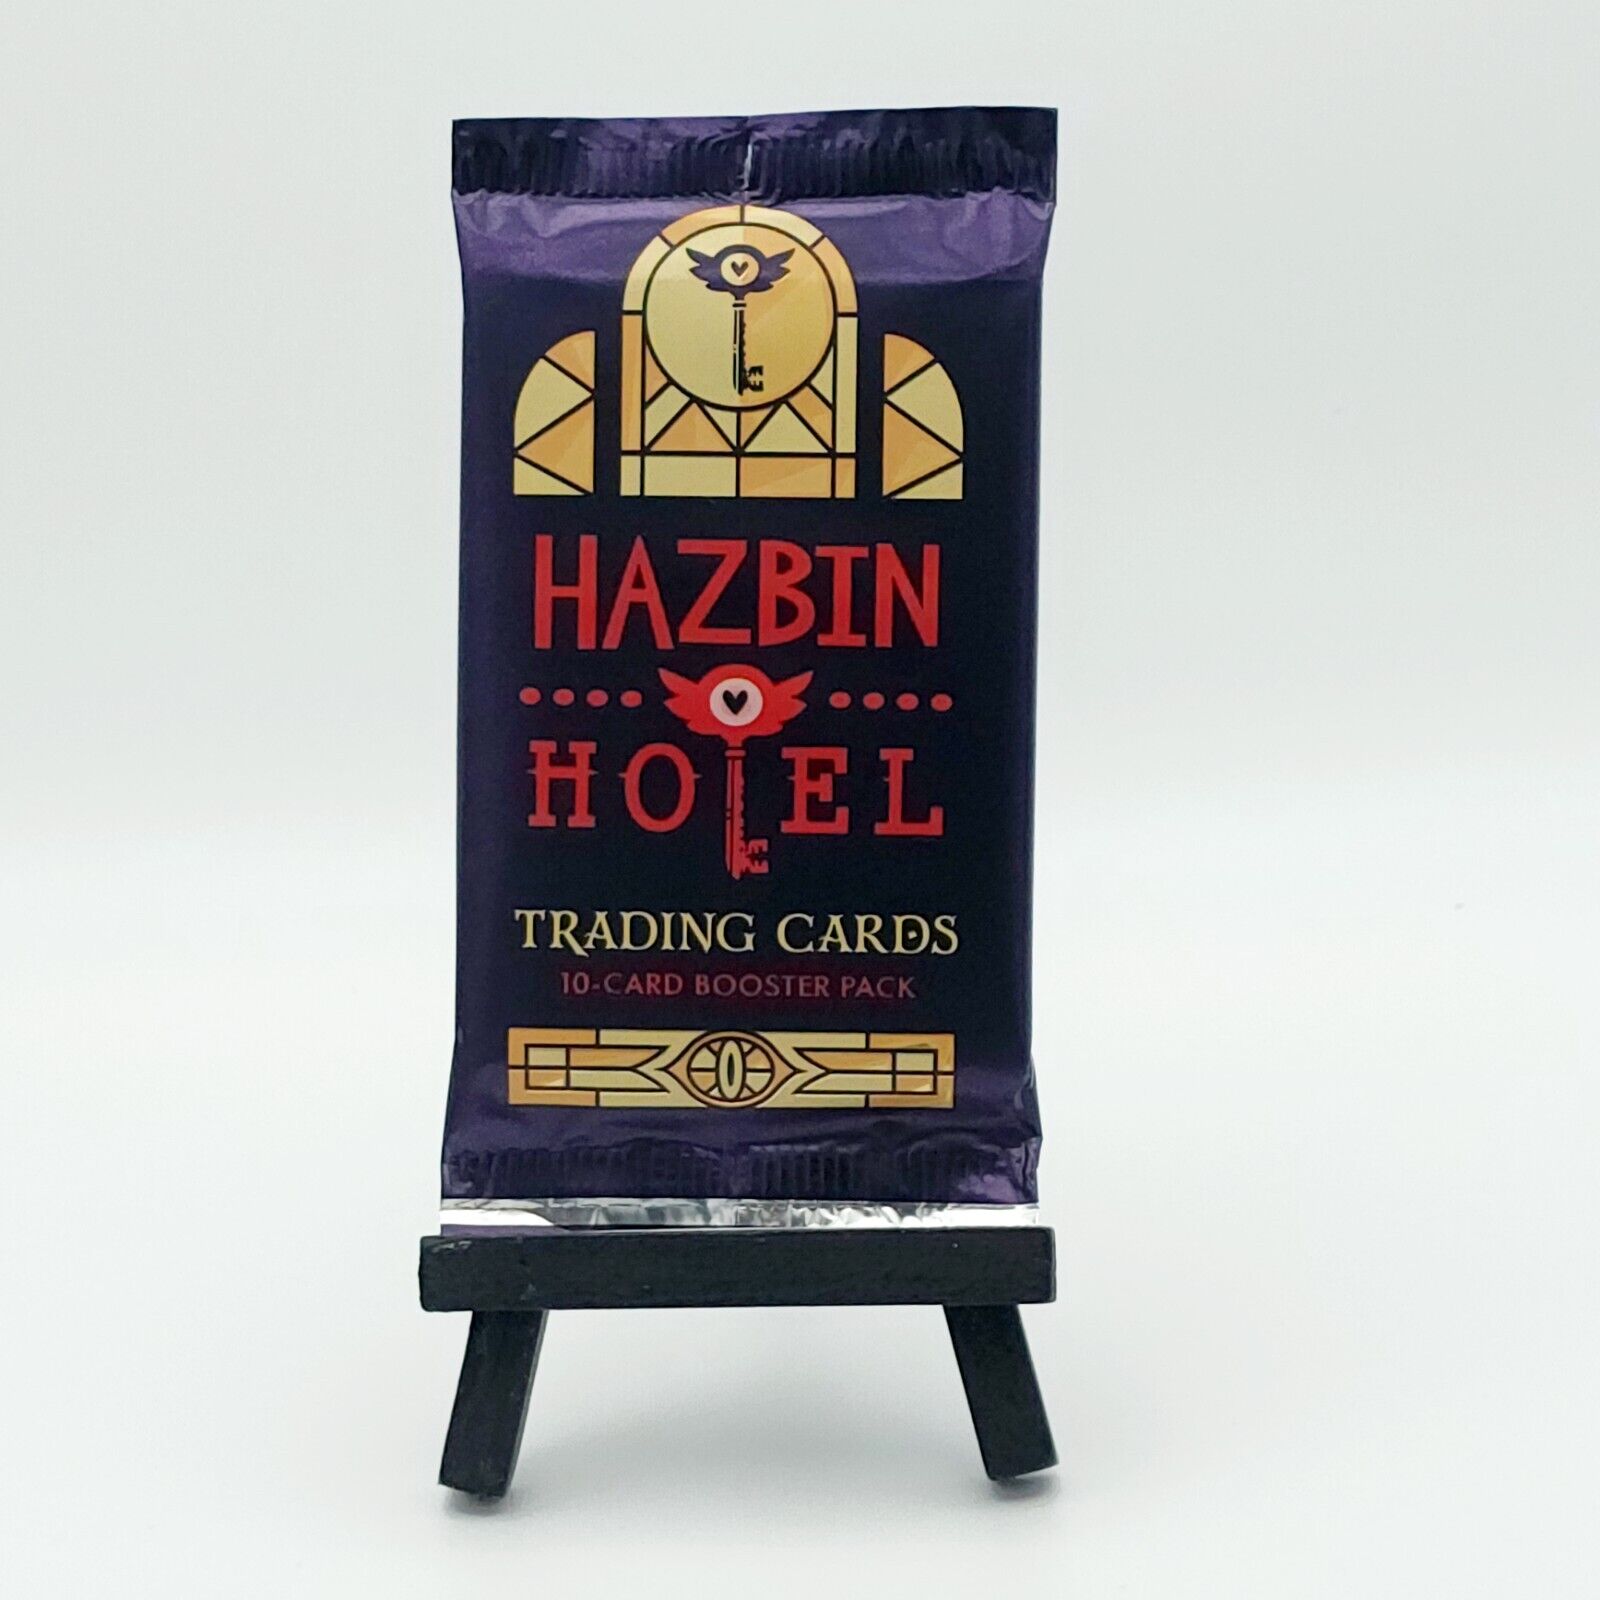 Hazbin Hotel Trading Card Pack - Brand New Sealed - IN HAND - IMMEDIATE SHIPPING